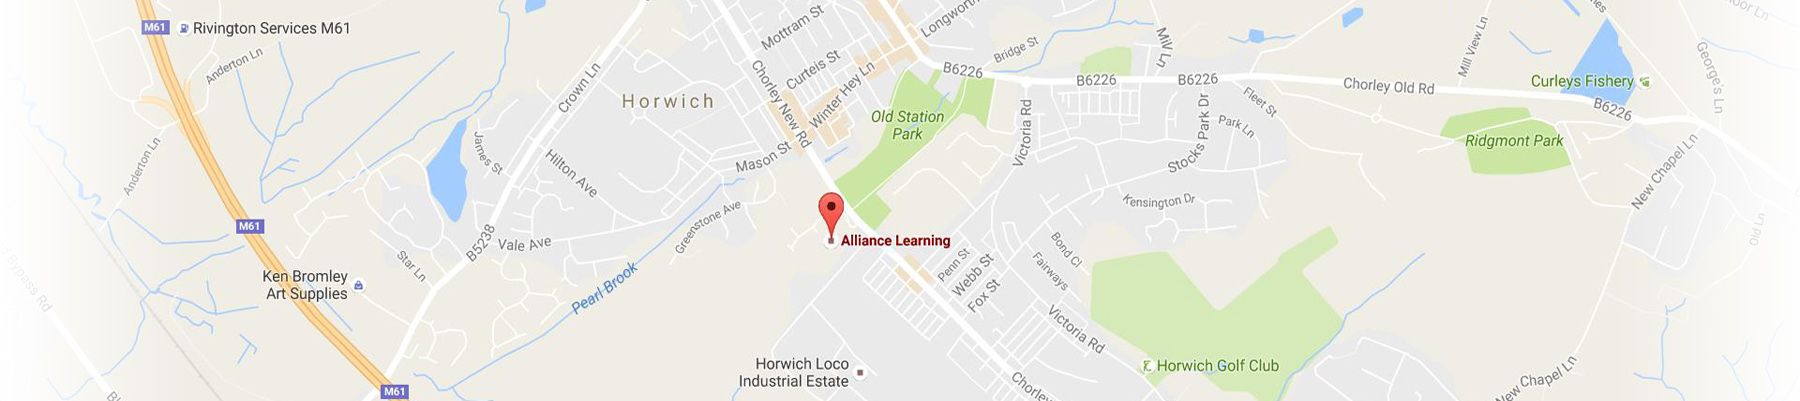 Alliance Learning Location.jpeg